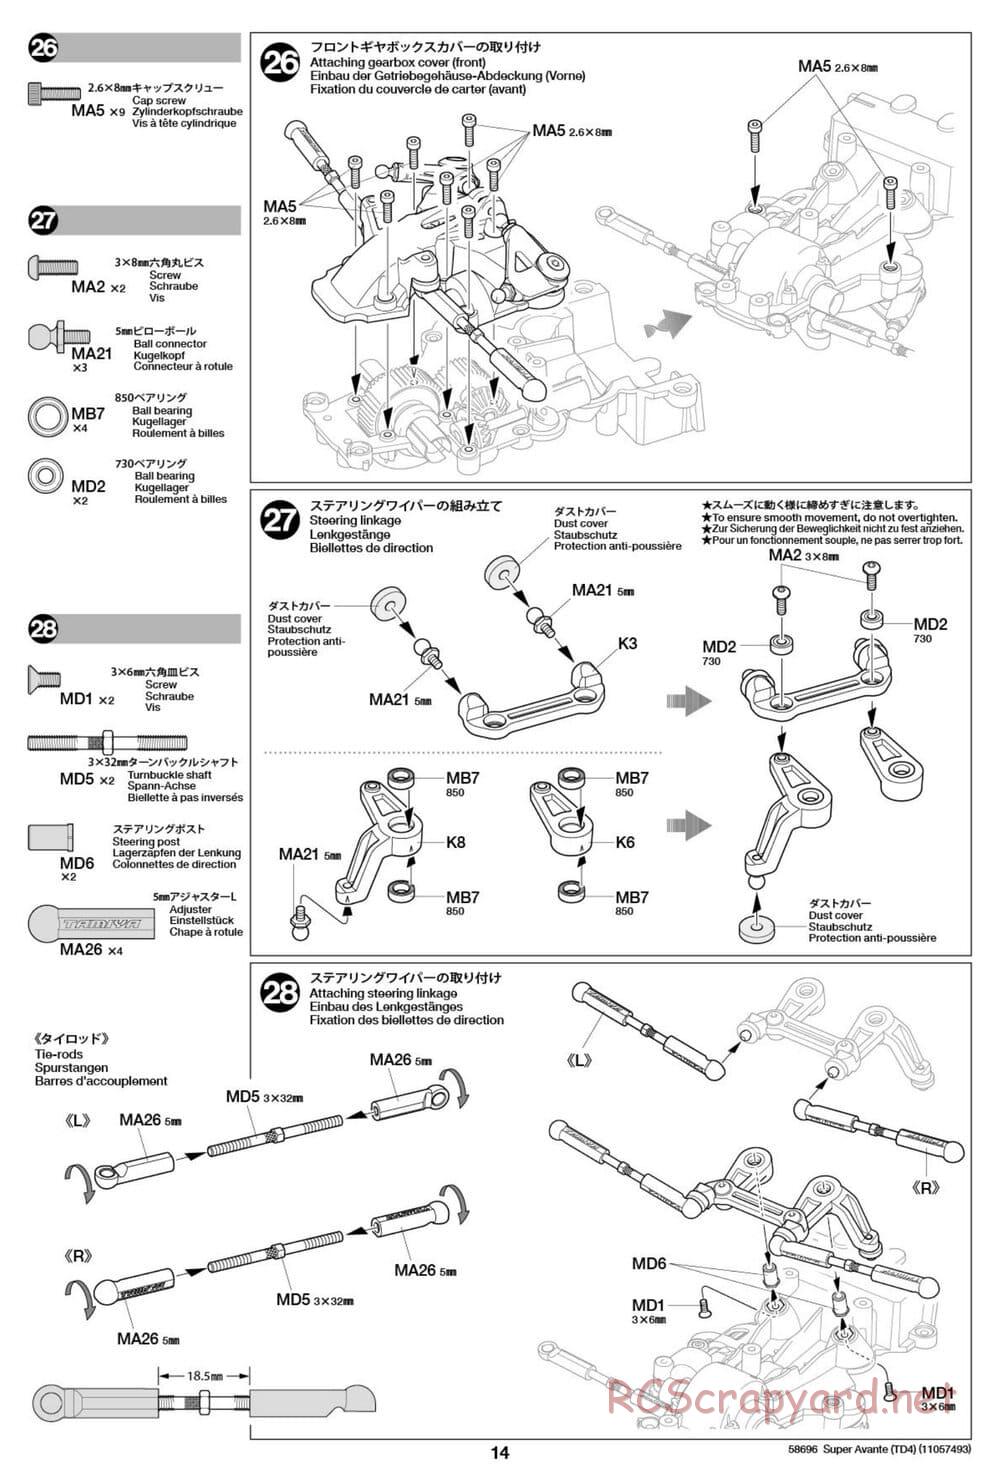 Tamiya - Super Avante - TD4 Chassis - Manual - Page 15